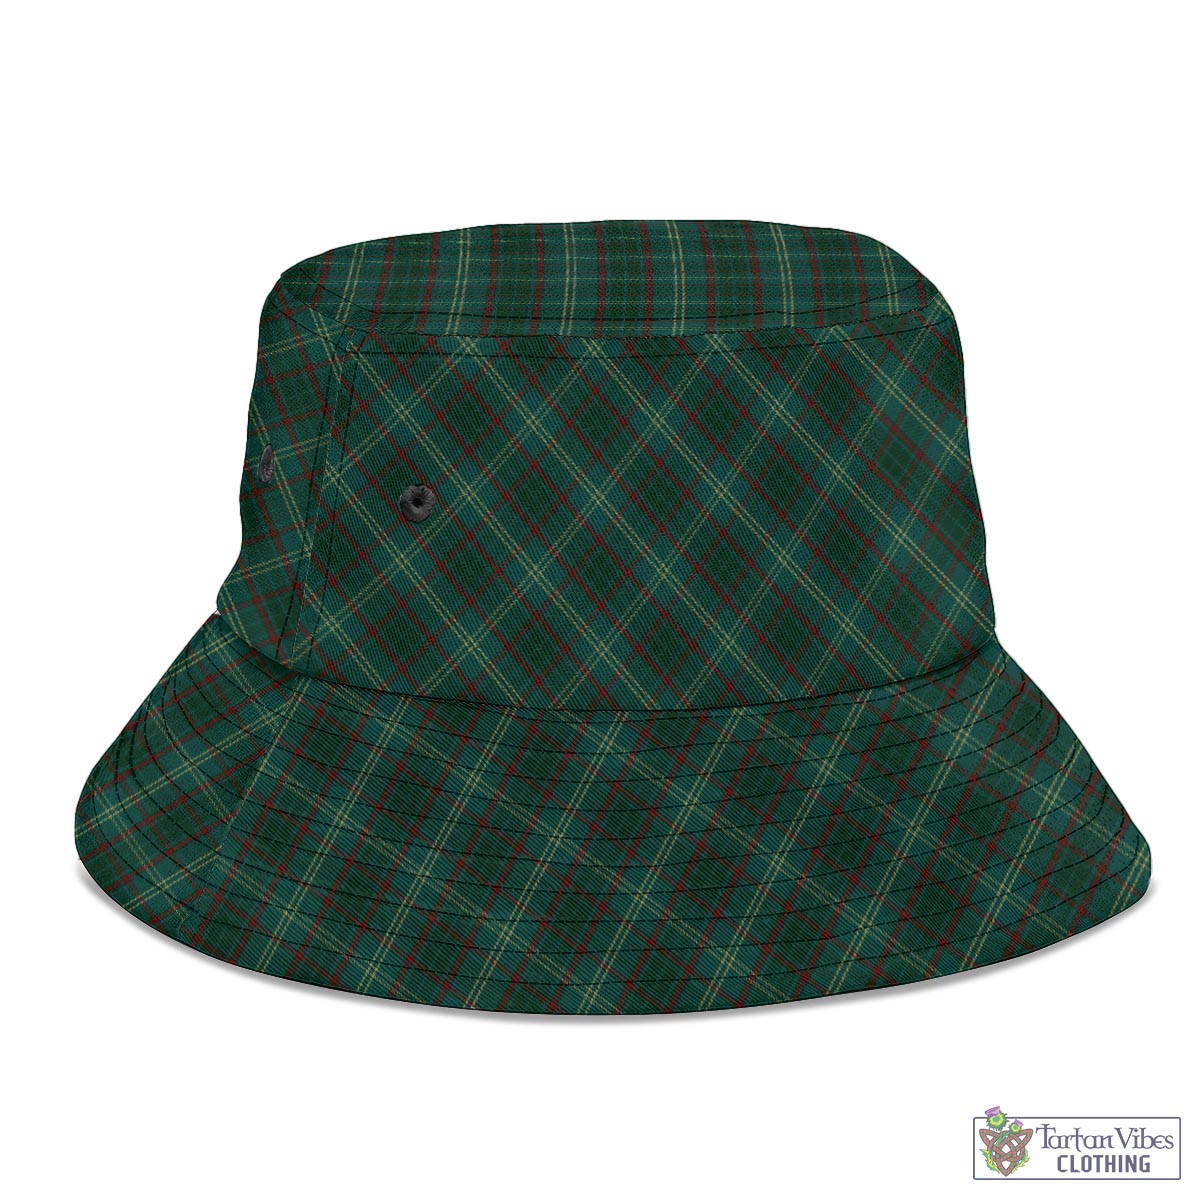 Tartan Vibes Clothing Armagh County Ireland Tartan Bucket Hat